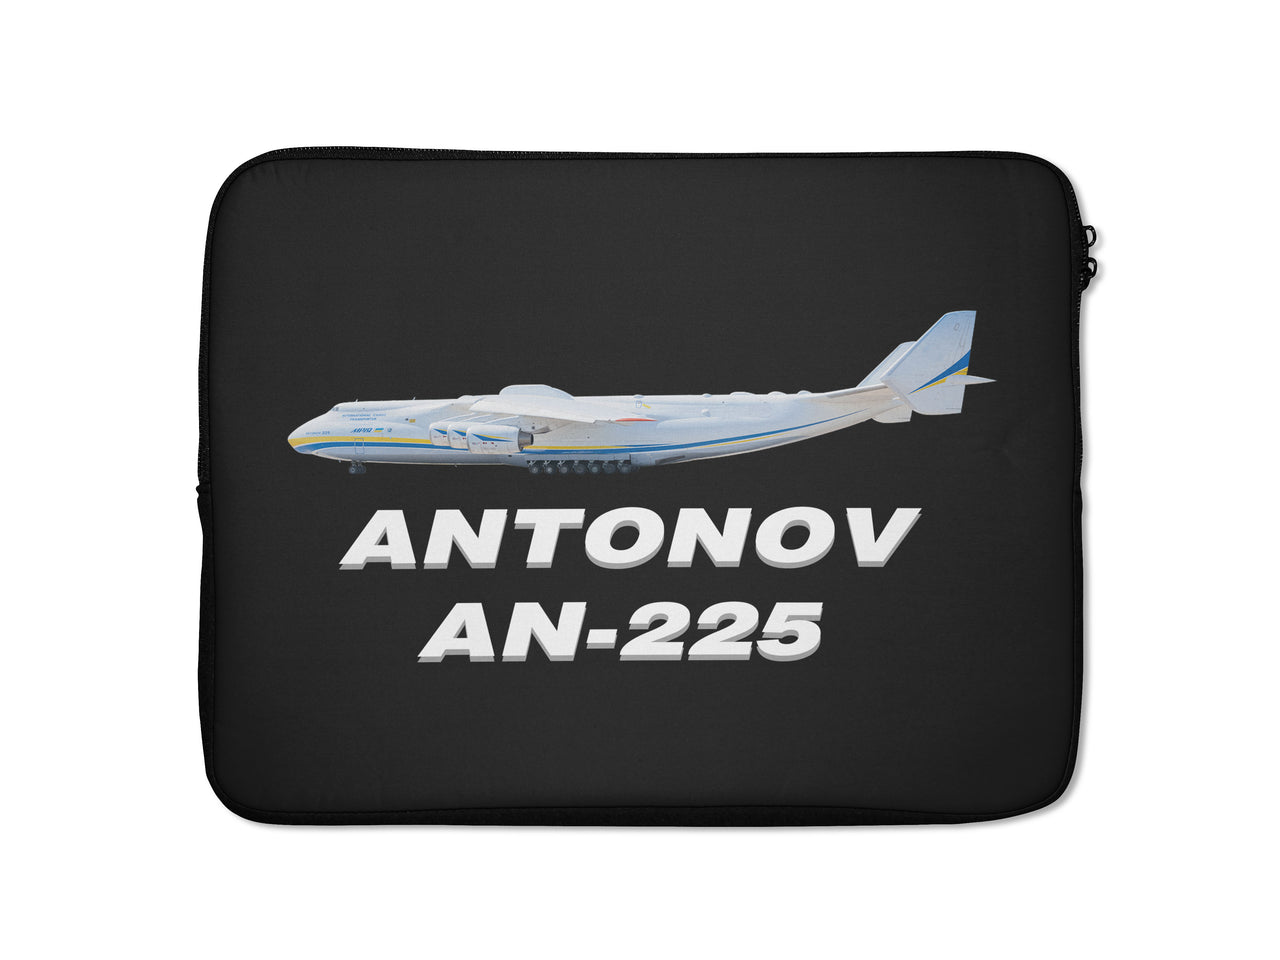 The Antonov AN-225 Designed Laptop & Tablet Cases